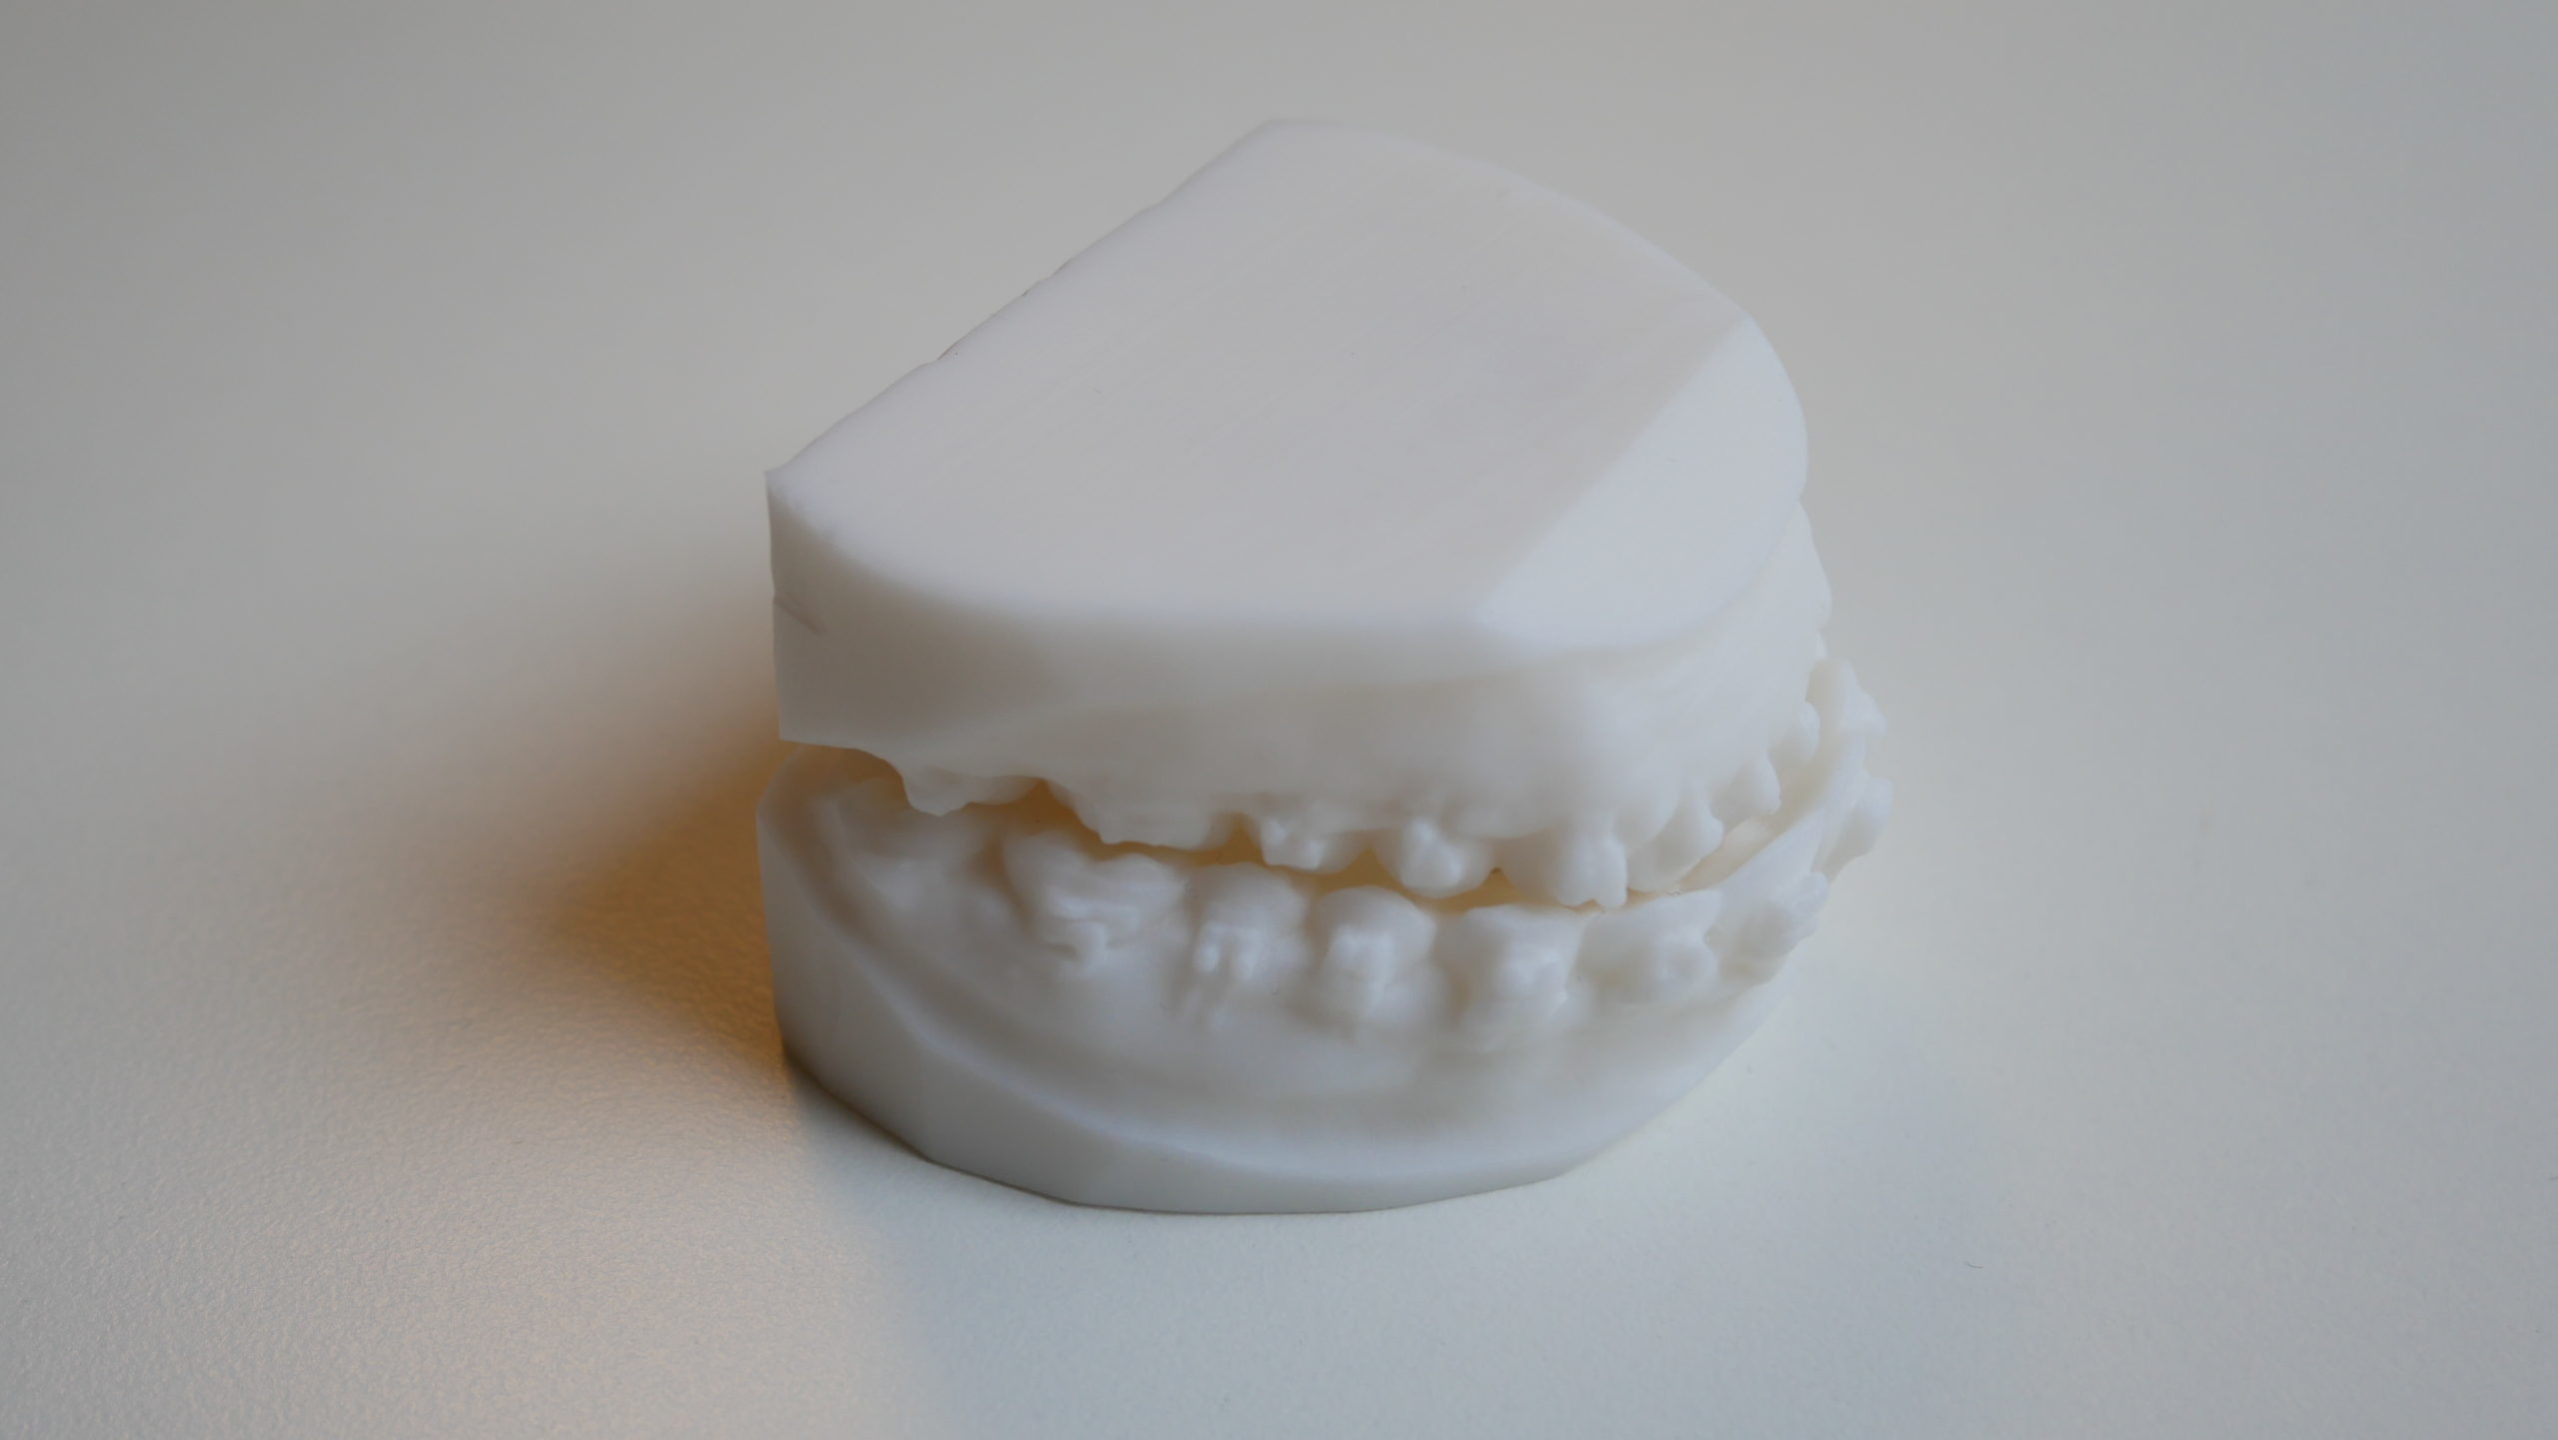 3D printed maxillofacial anatomy